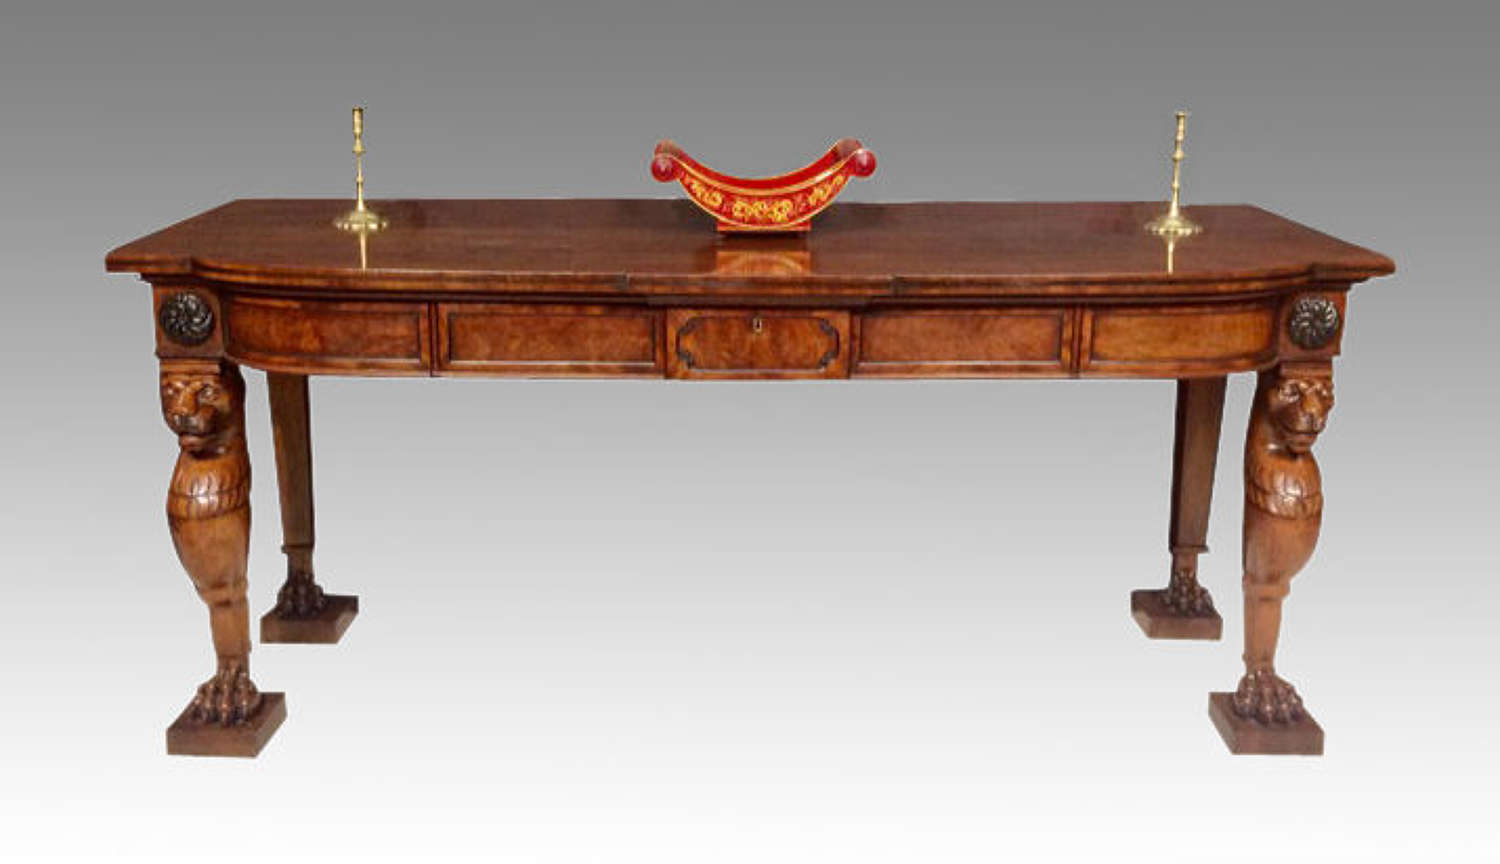 Regency mahogany side table, manner of Thomas Hope.